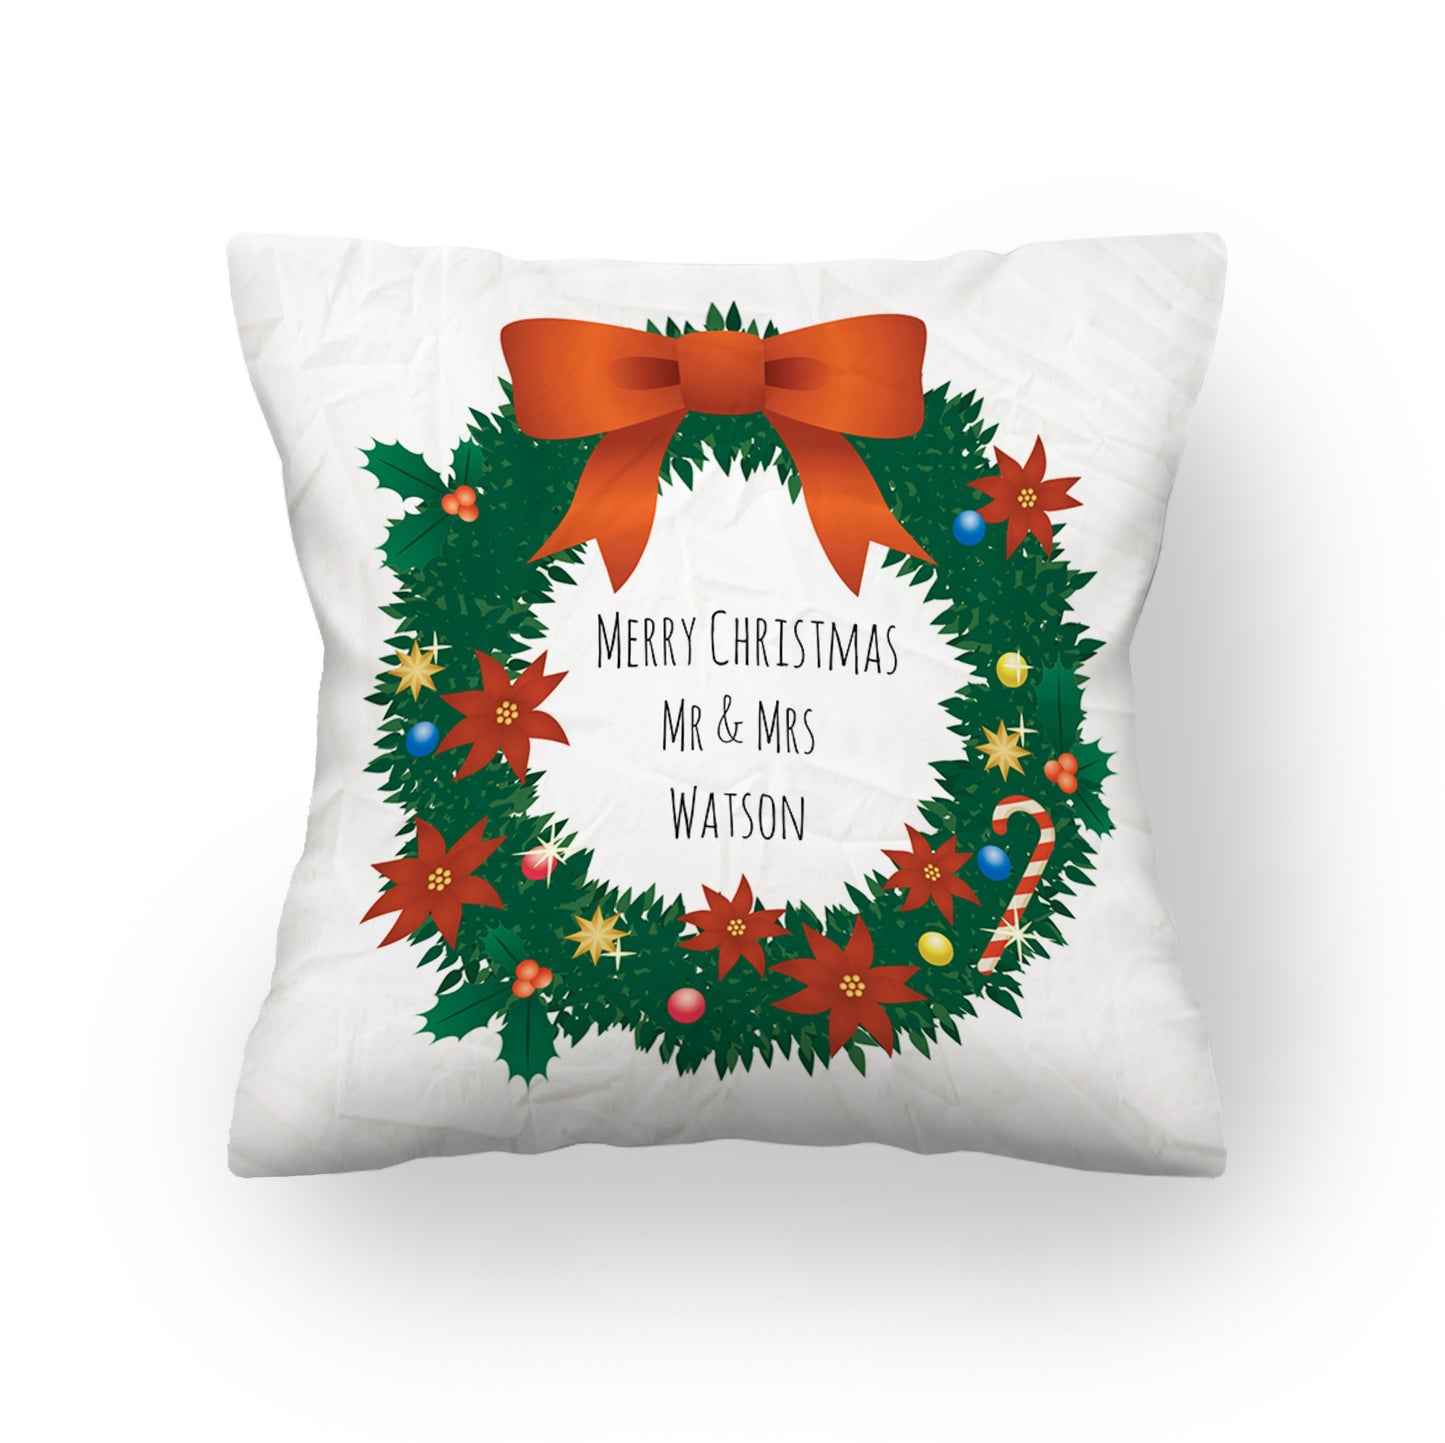 Personalised Christmas wreath cushion. Text 'Merry Christmas', 'Mr & Mrs Watson'.